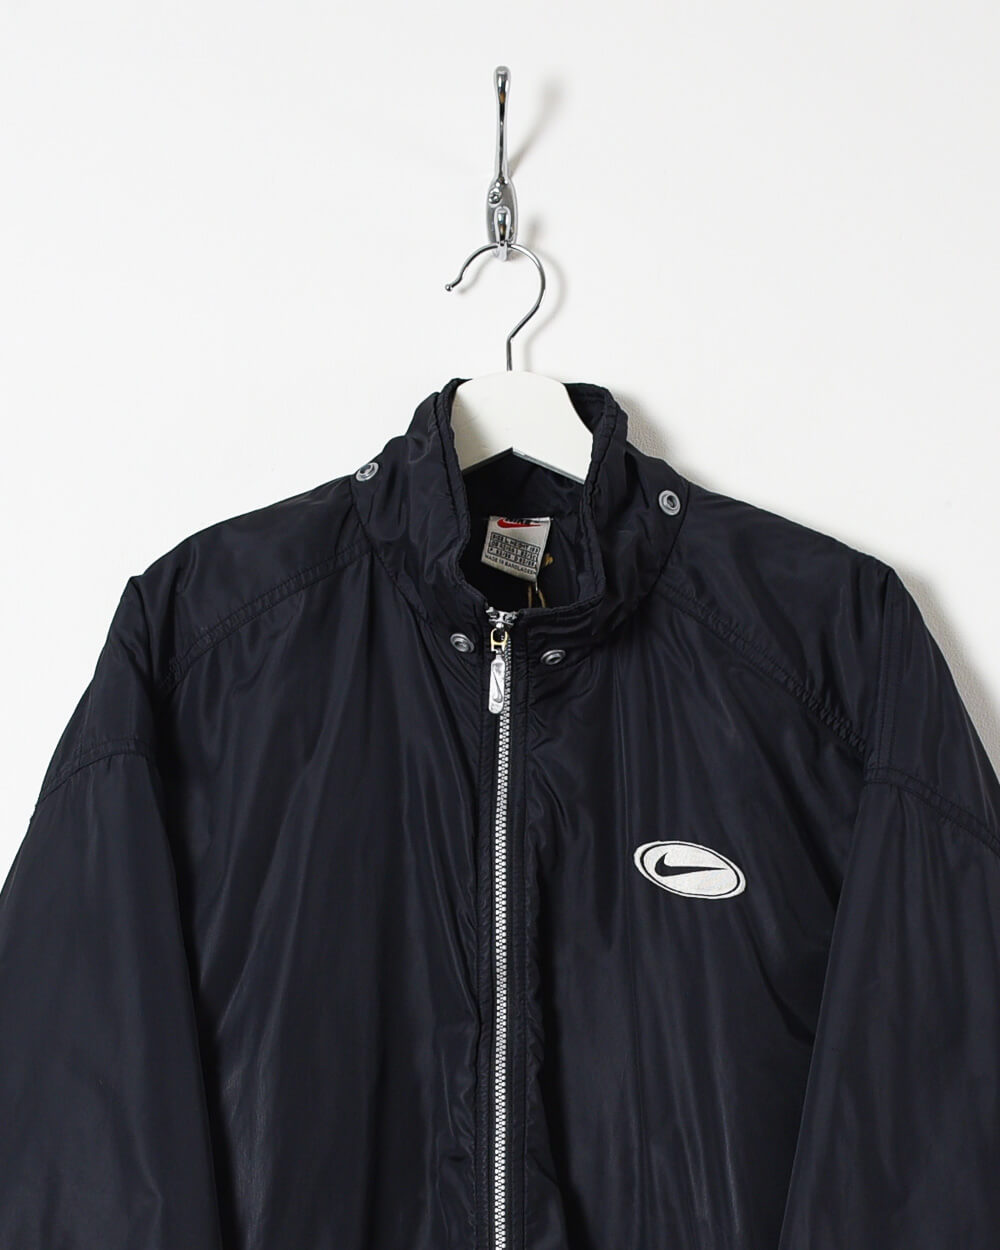 Black Nike Winter Coat -  Large